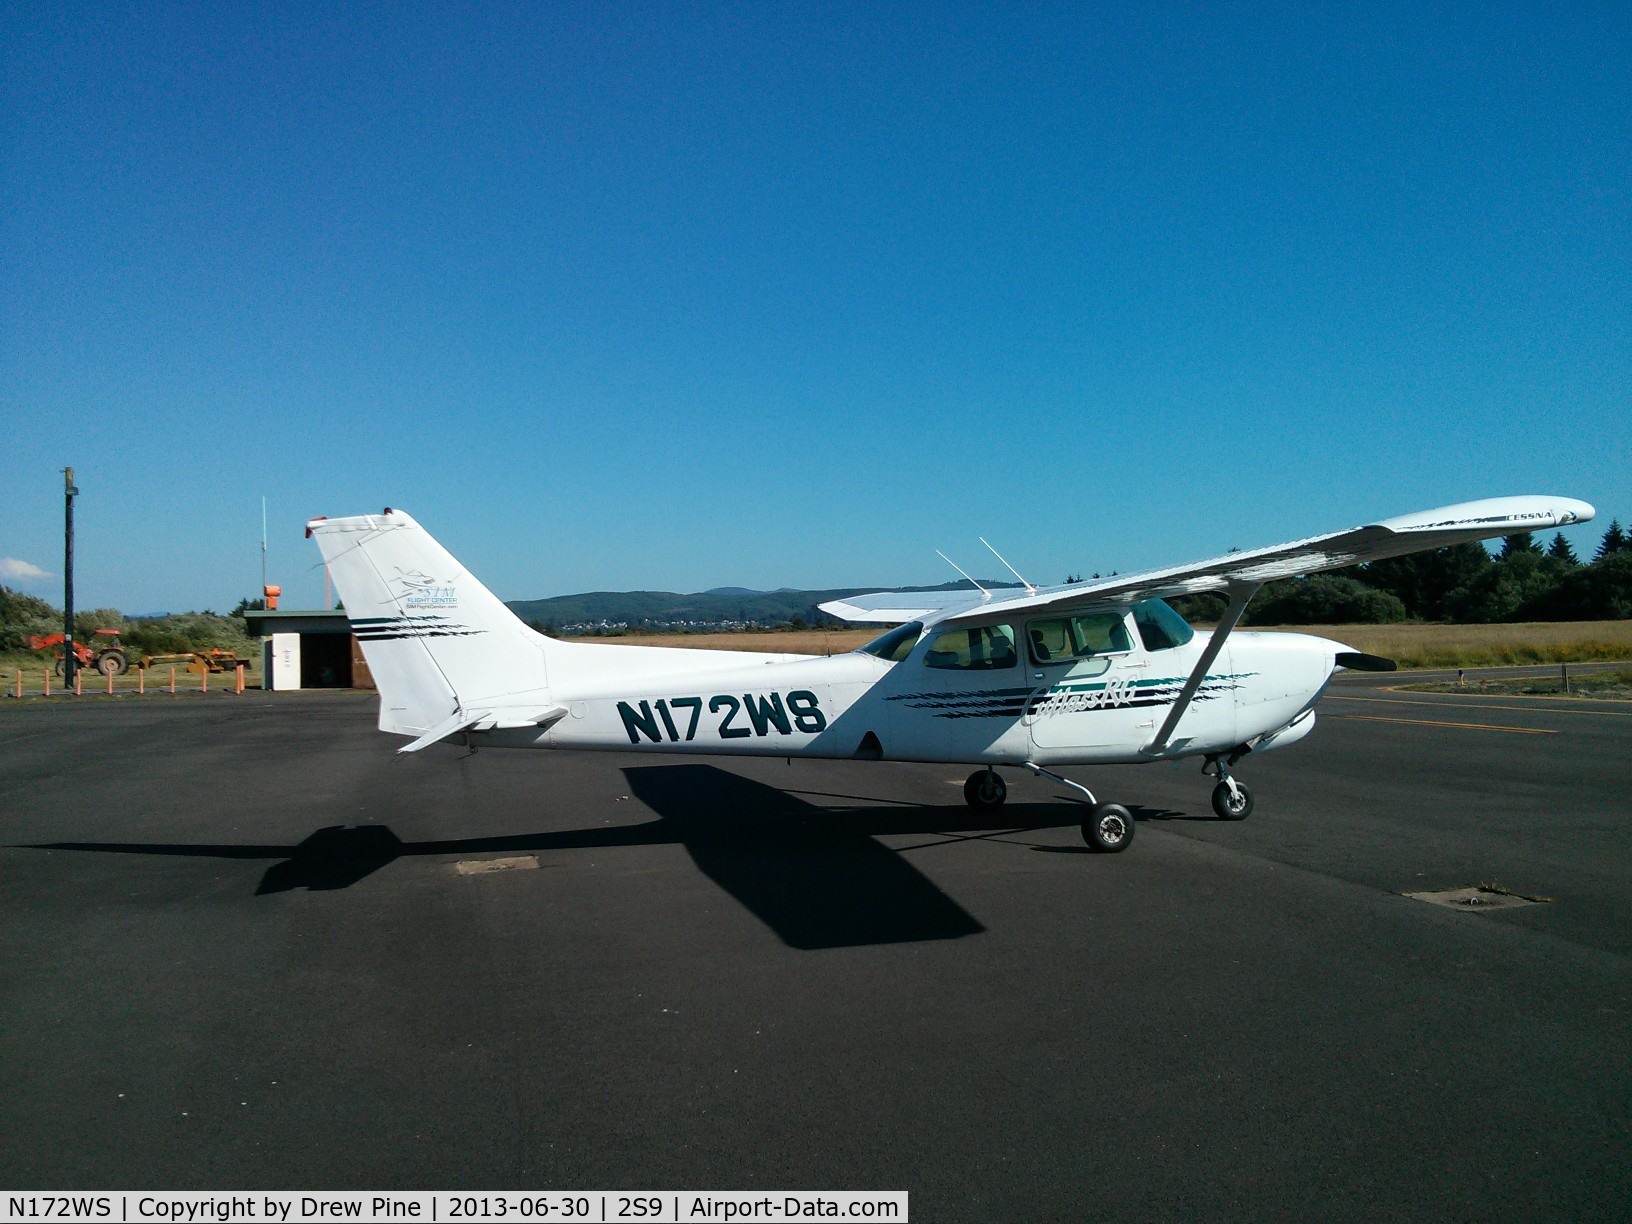 N172WS, 1979 Cessna 172RG Cutlass RG C/N 172RG0229, Parked at Willapa Harbor Airport.